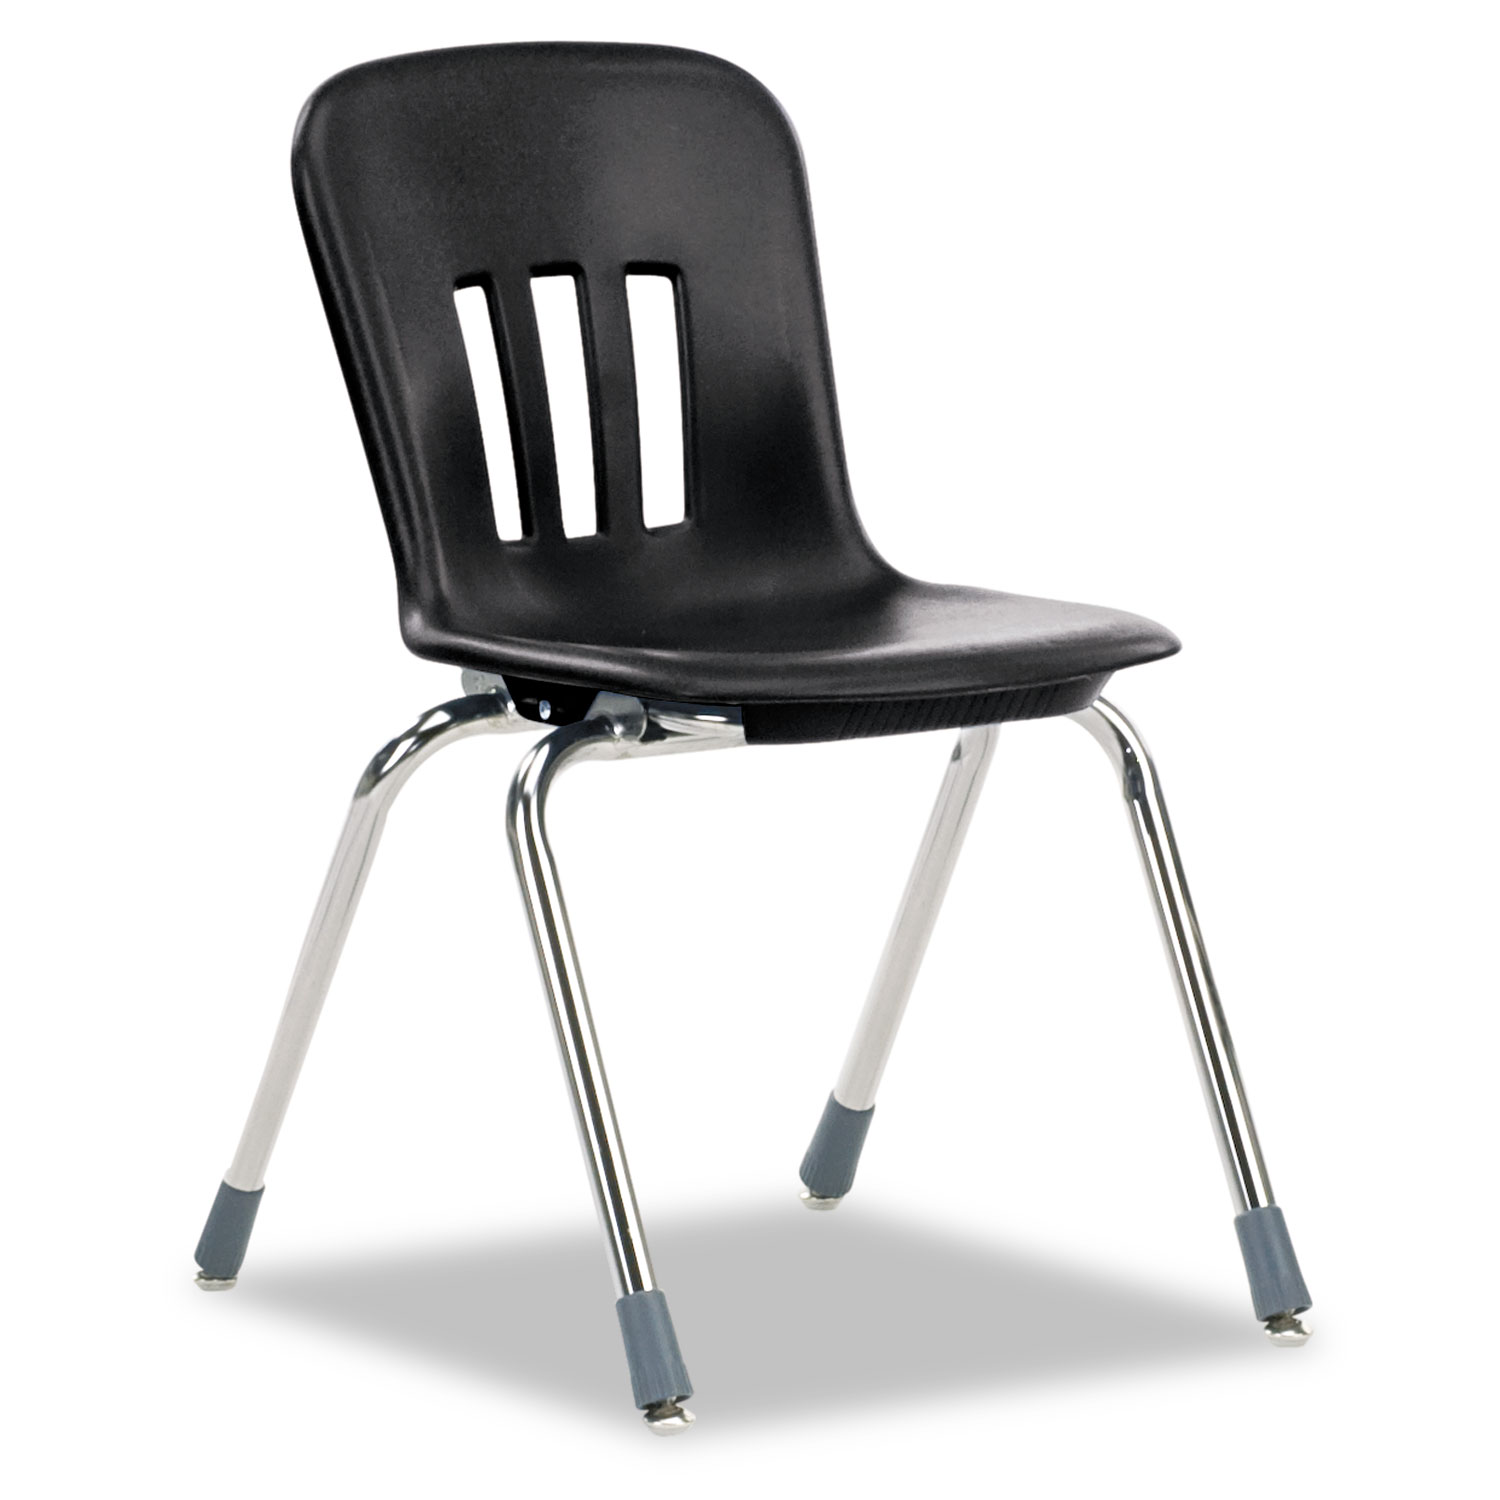 Metaphor Series Classroom Chair, 16-1/2 Seat Height, Black/Chrome, 4/Carton